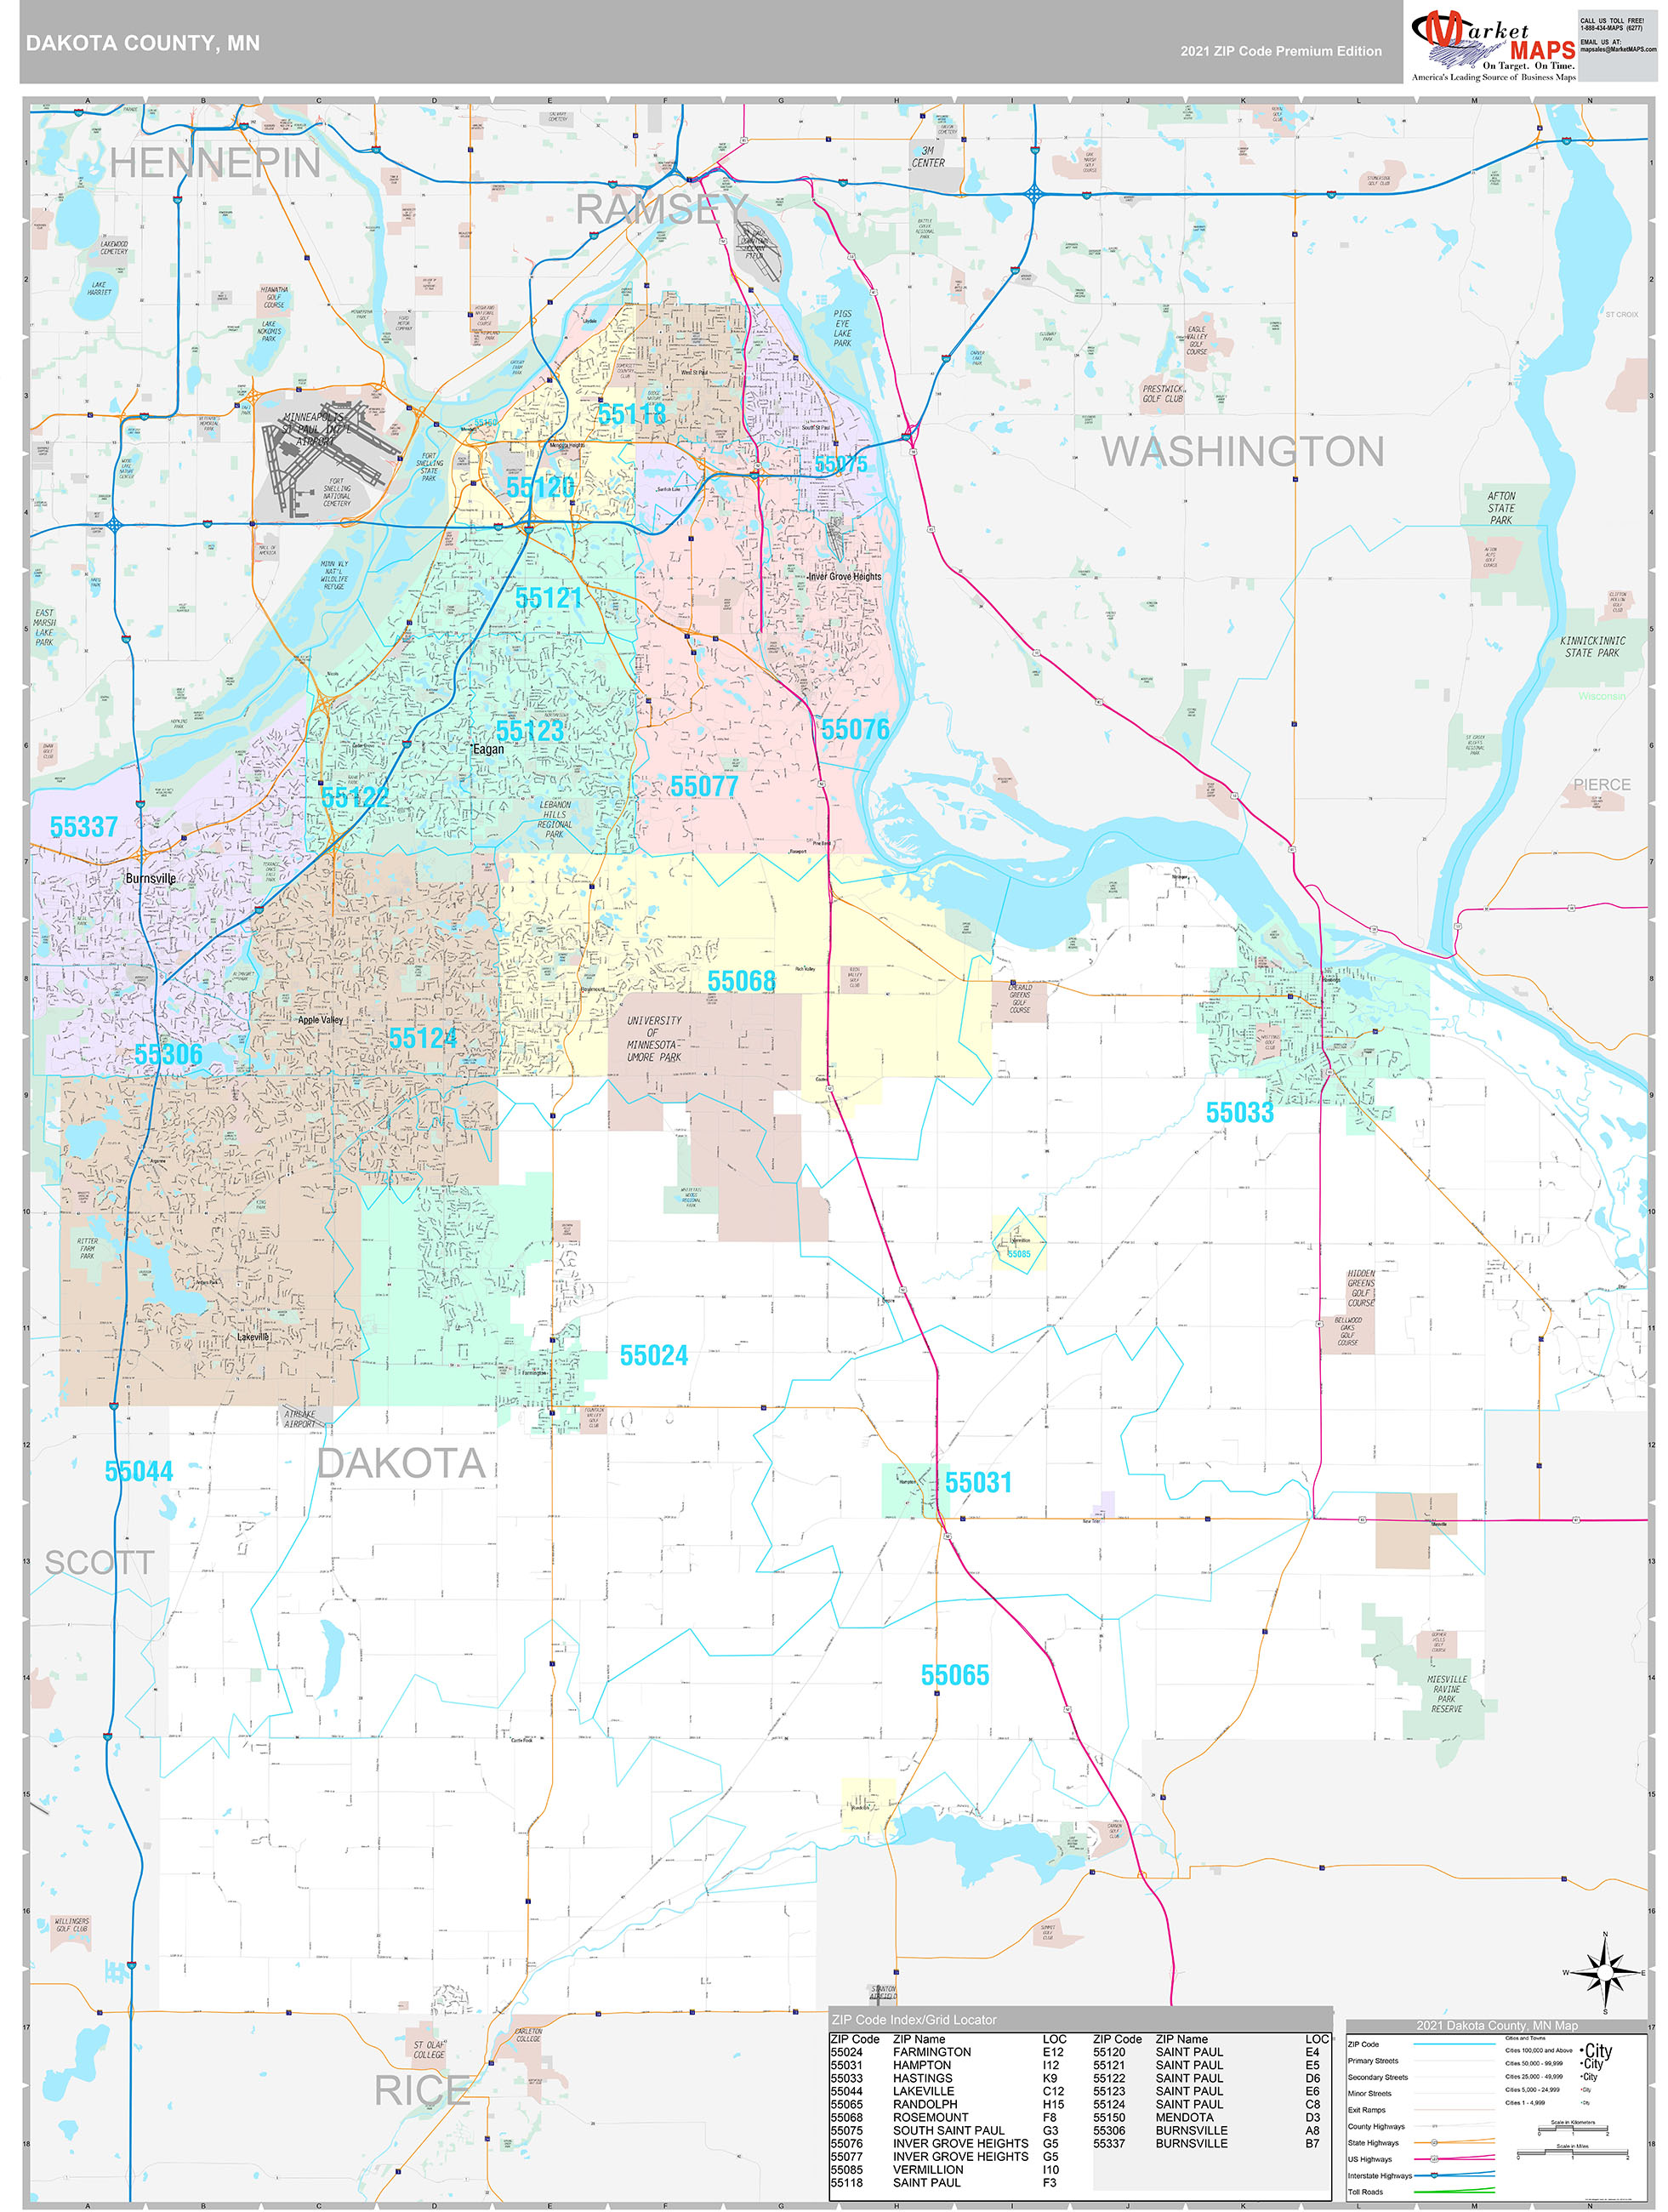 Dakota County, MN Wall Map Premium Style by MarketMAPS